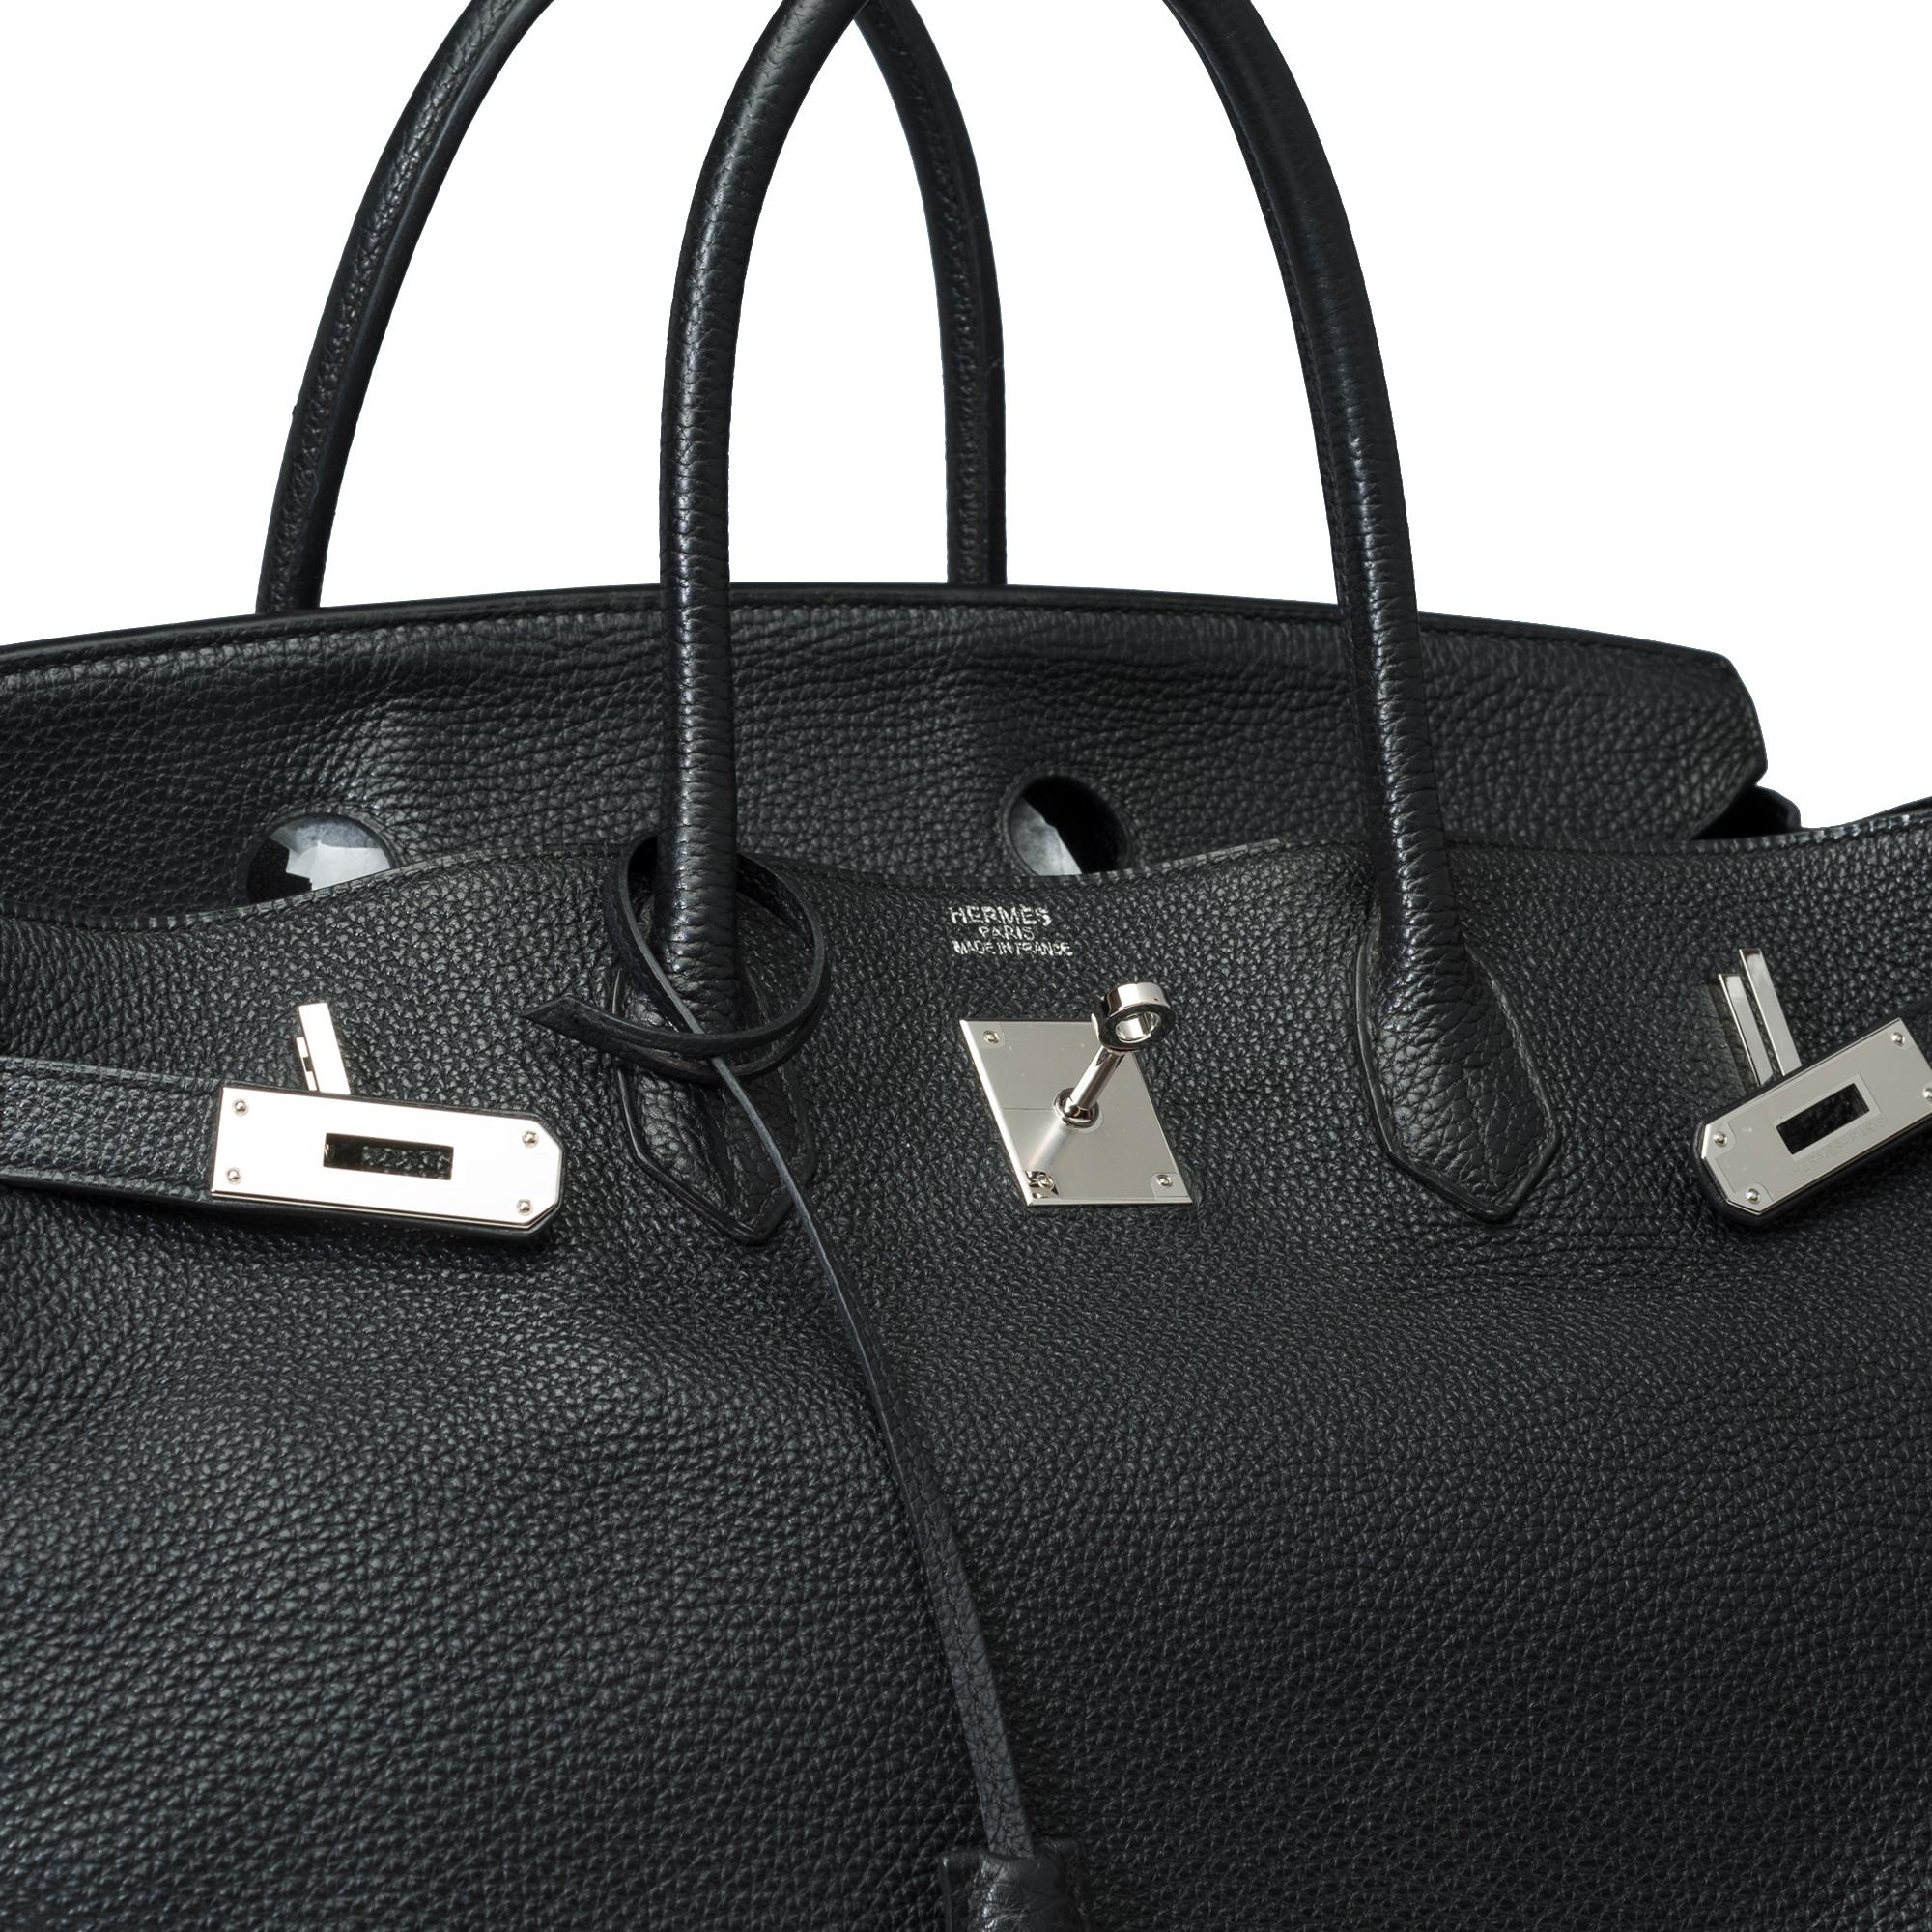 Very Classy Hermes Birkin 40 handbag in Black Togo Calf leather, SHW 2